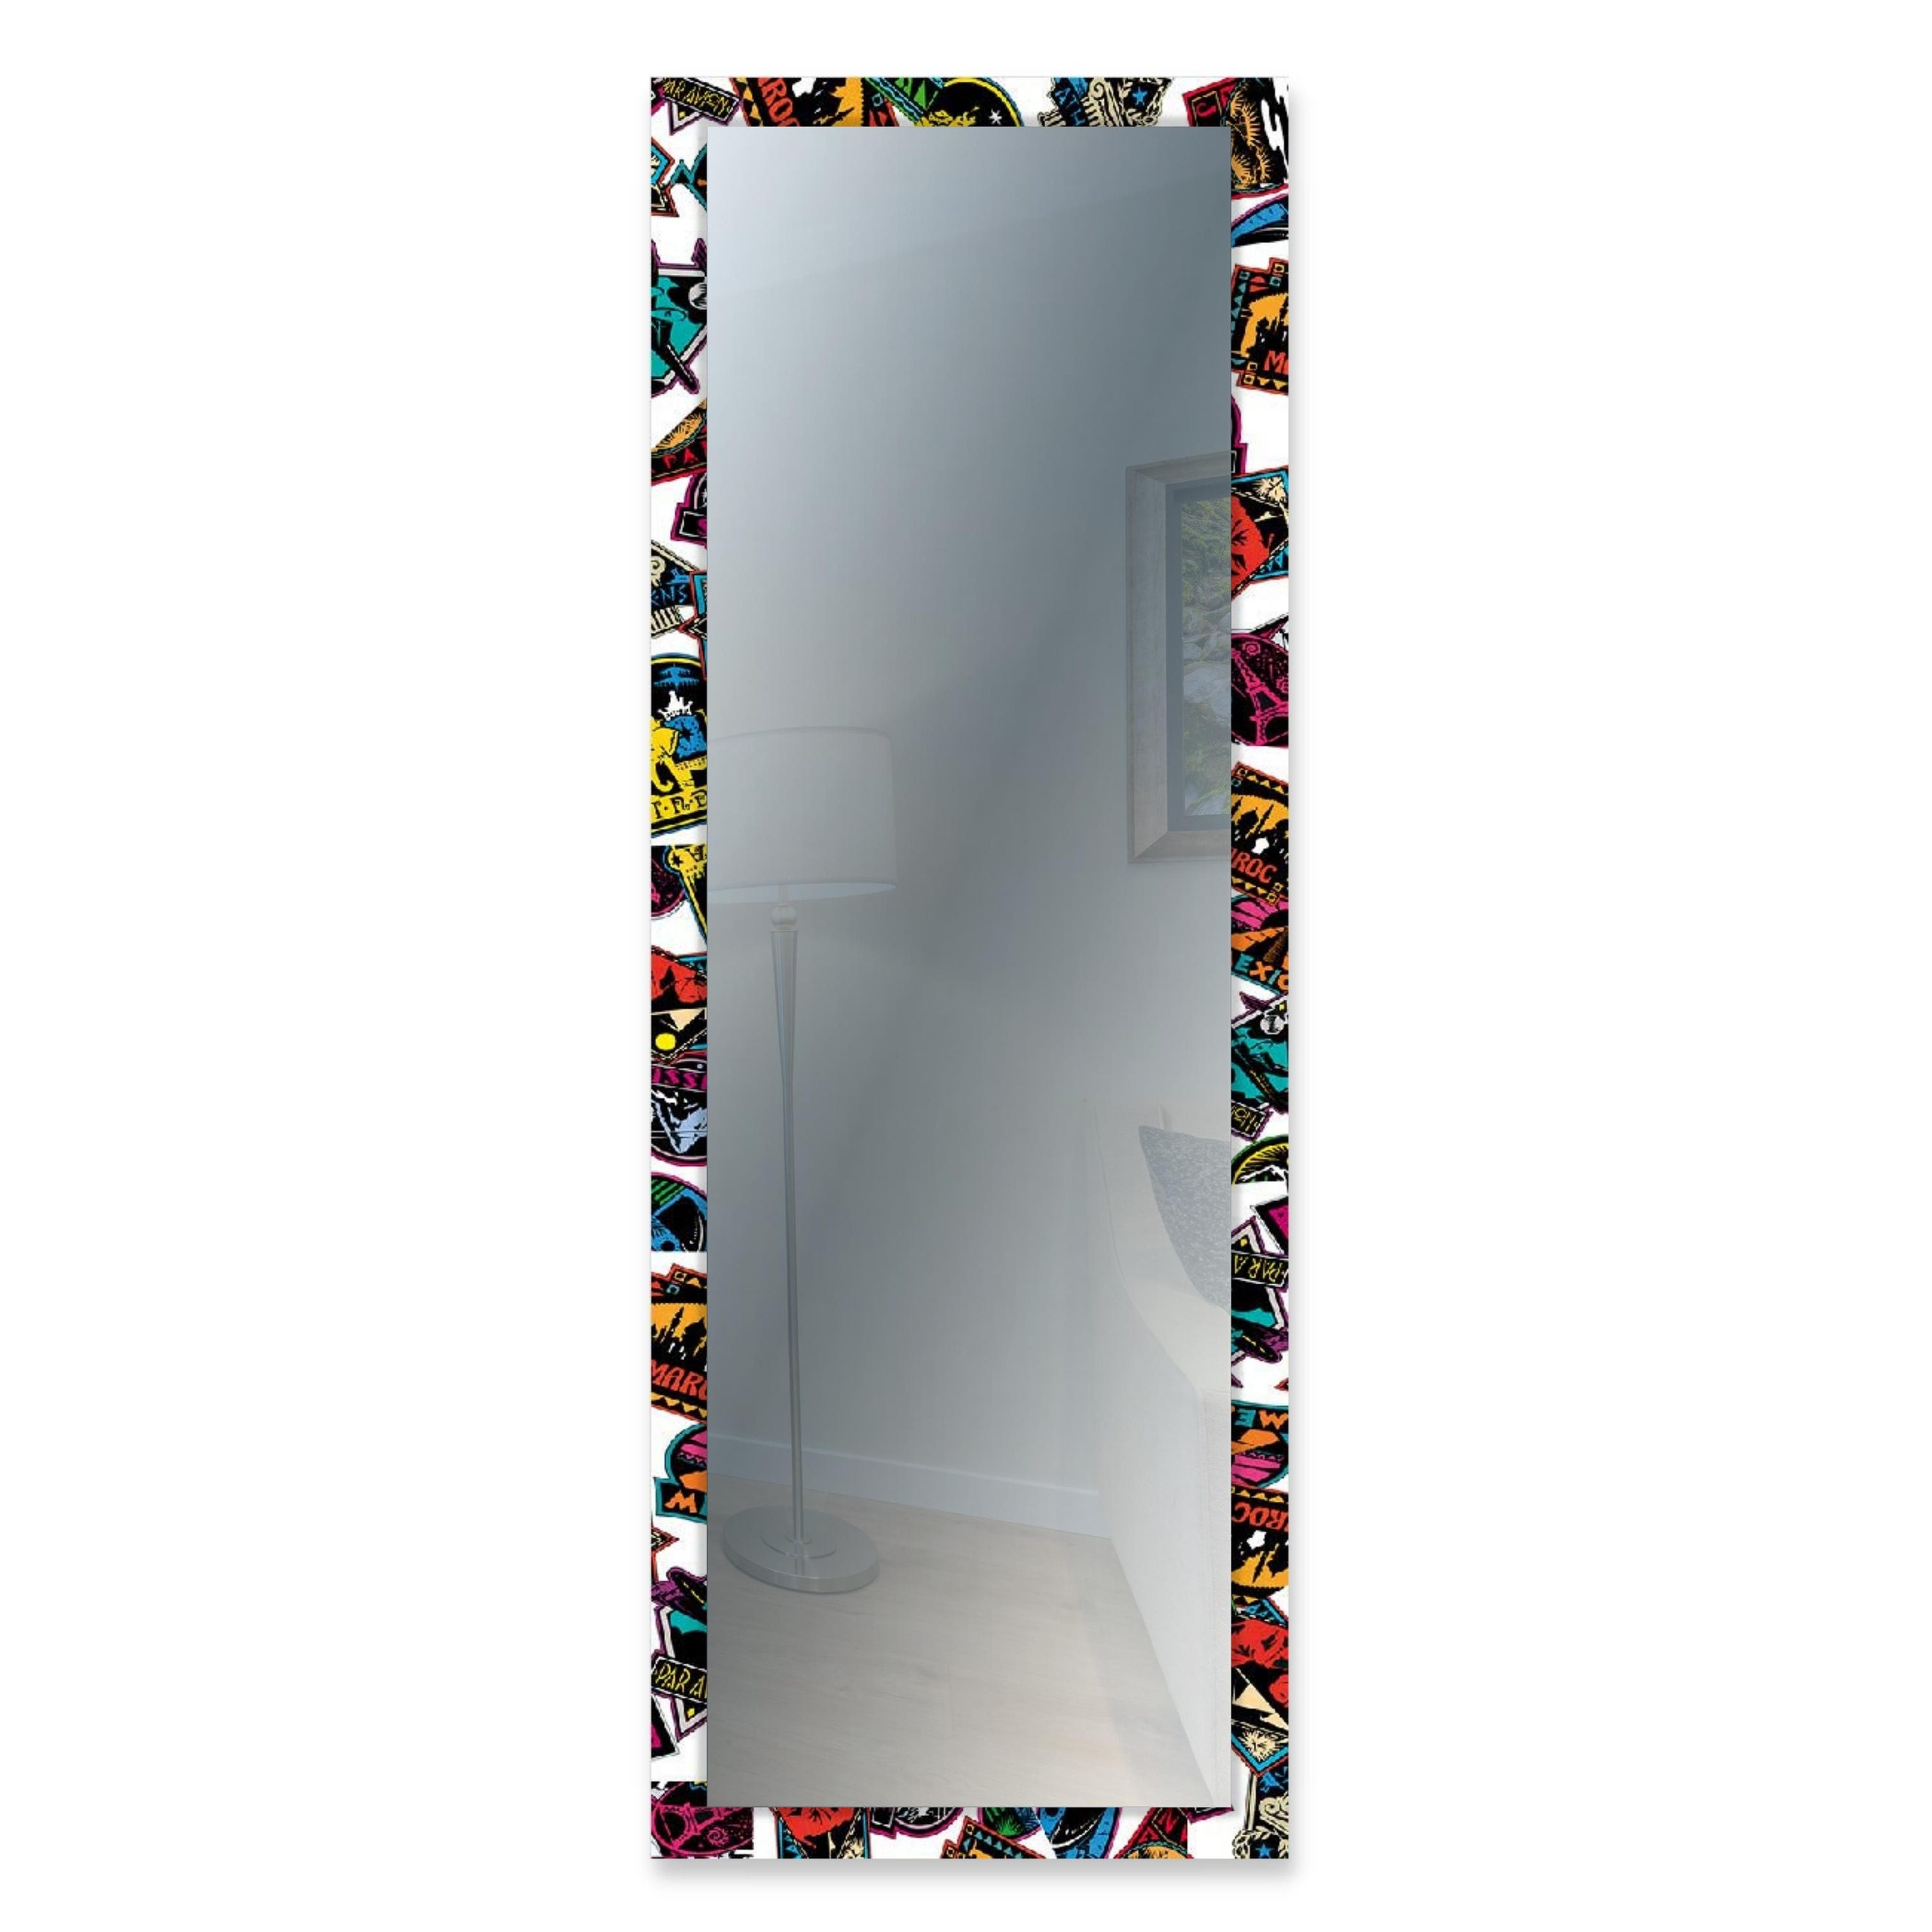 Specchio da parete lungo moderno Mirror Fantasy VOYAGER POP 44x127